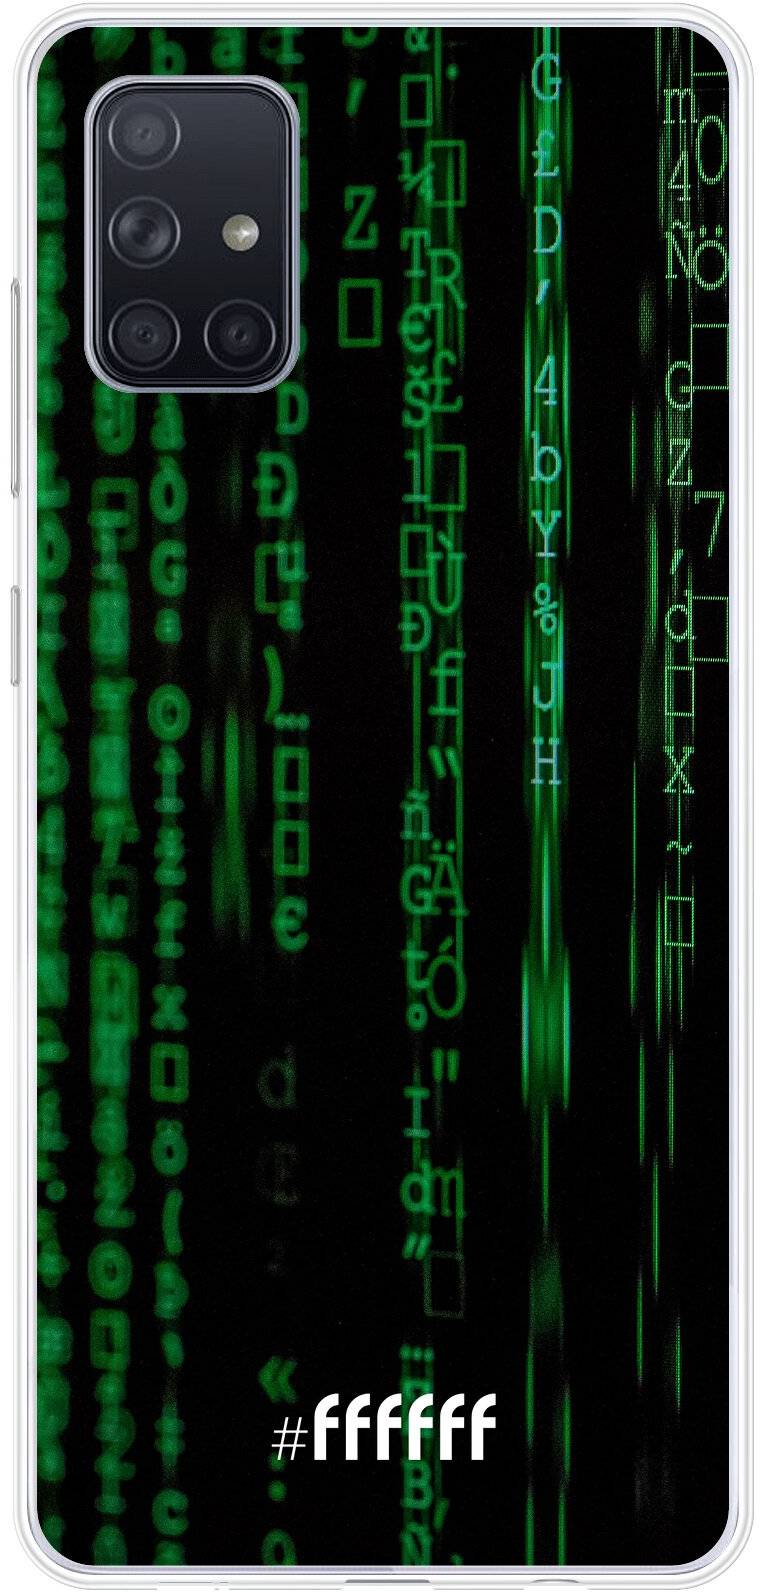 Hacking The Matrix Galaxy A71